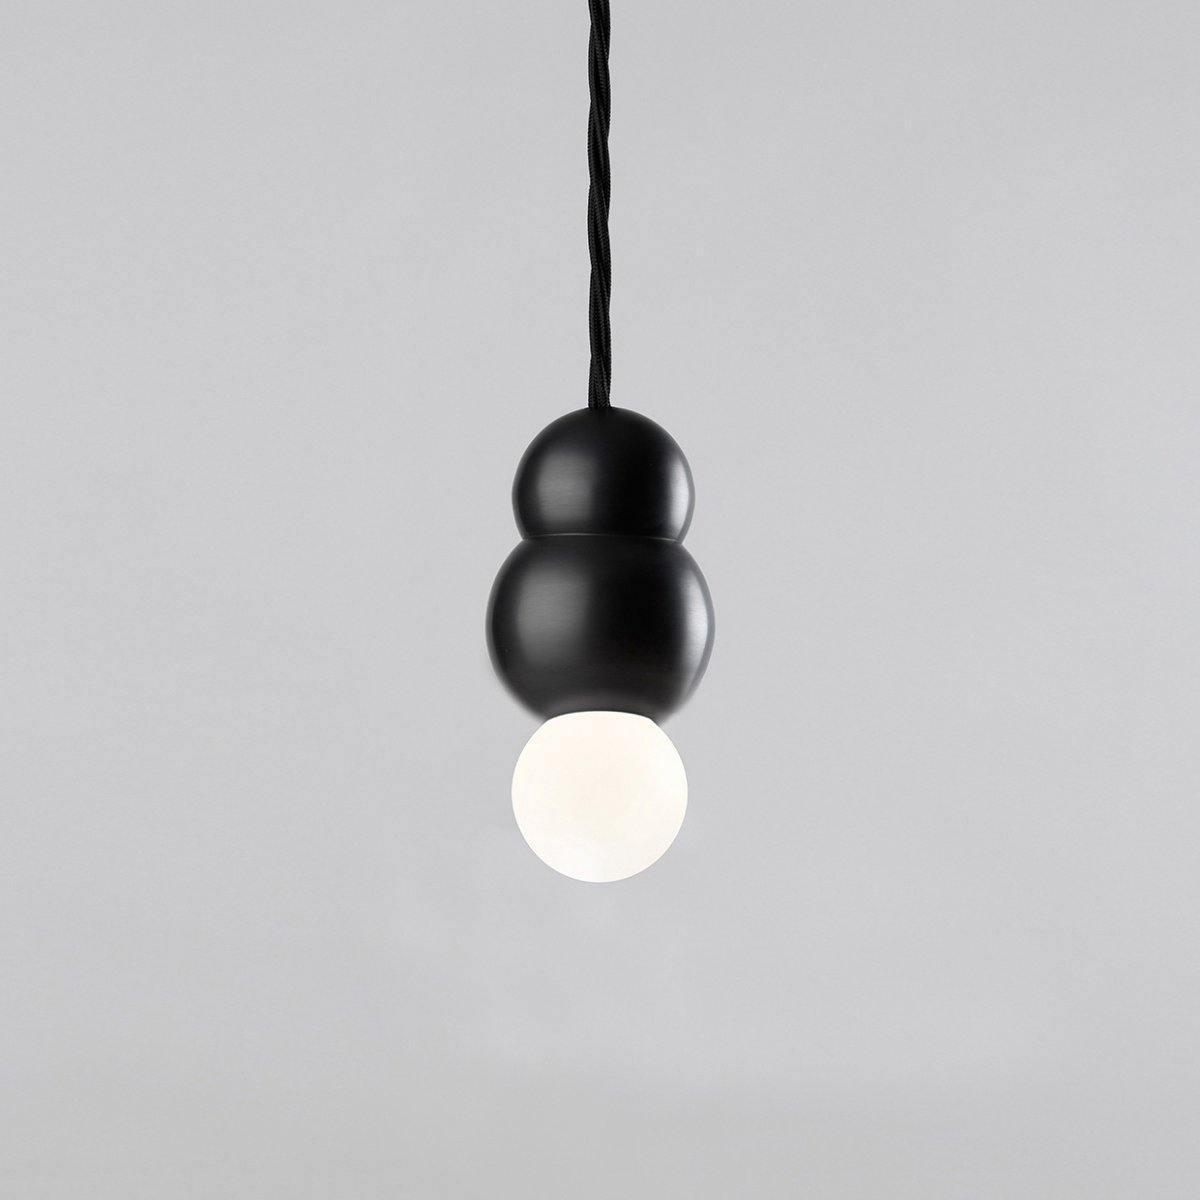 Ball light pendant 